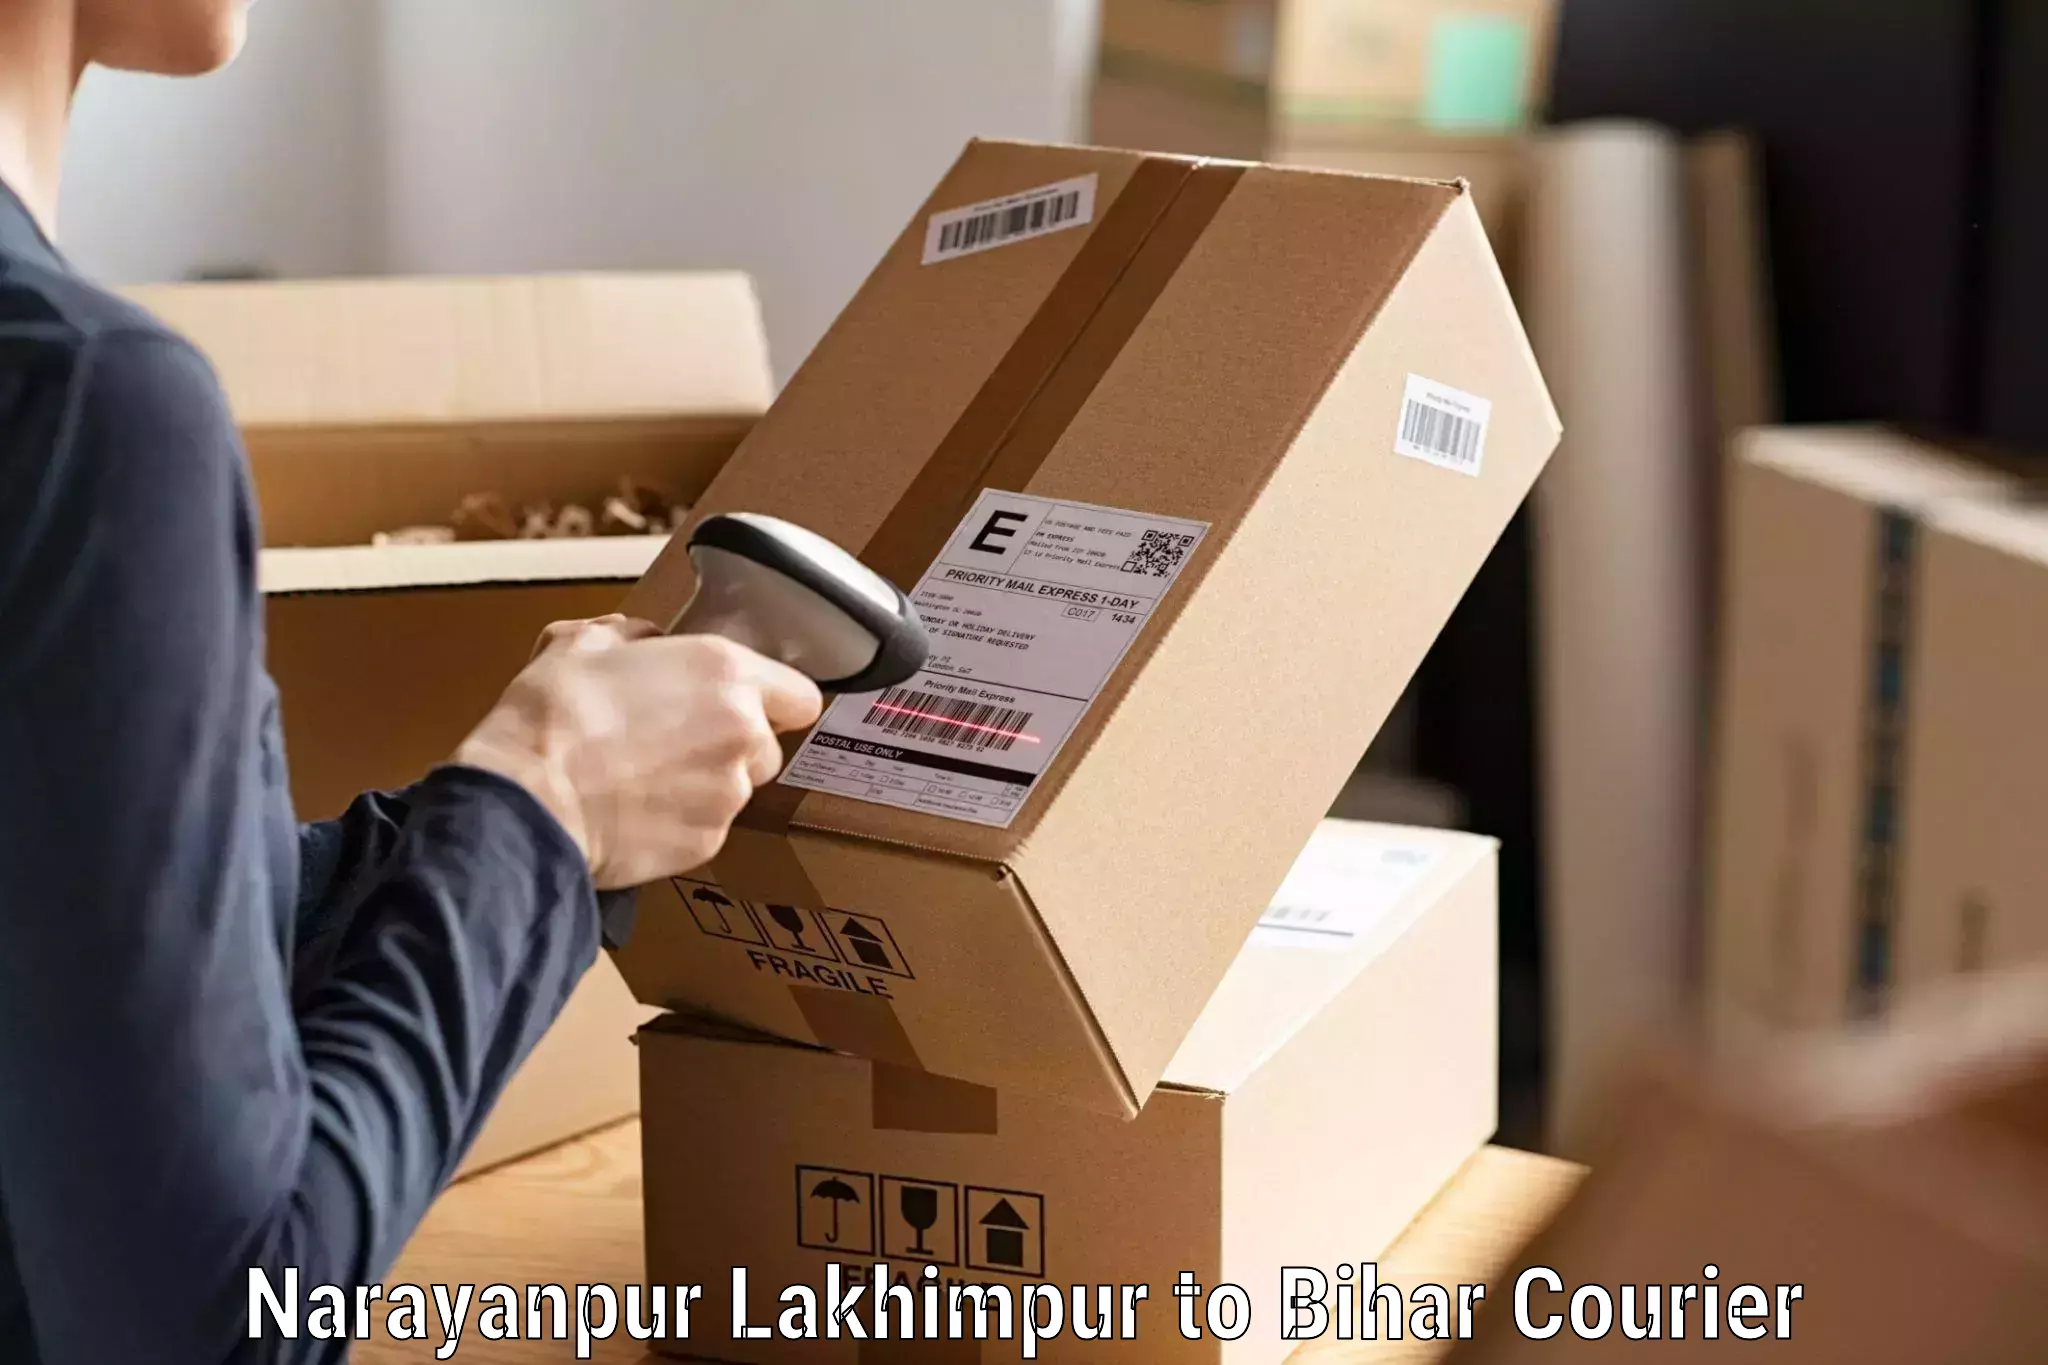 Courier service booking Narayanpur Lakhimpur to Kahalgaon